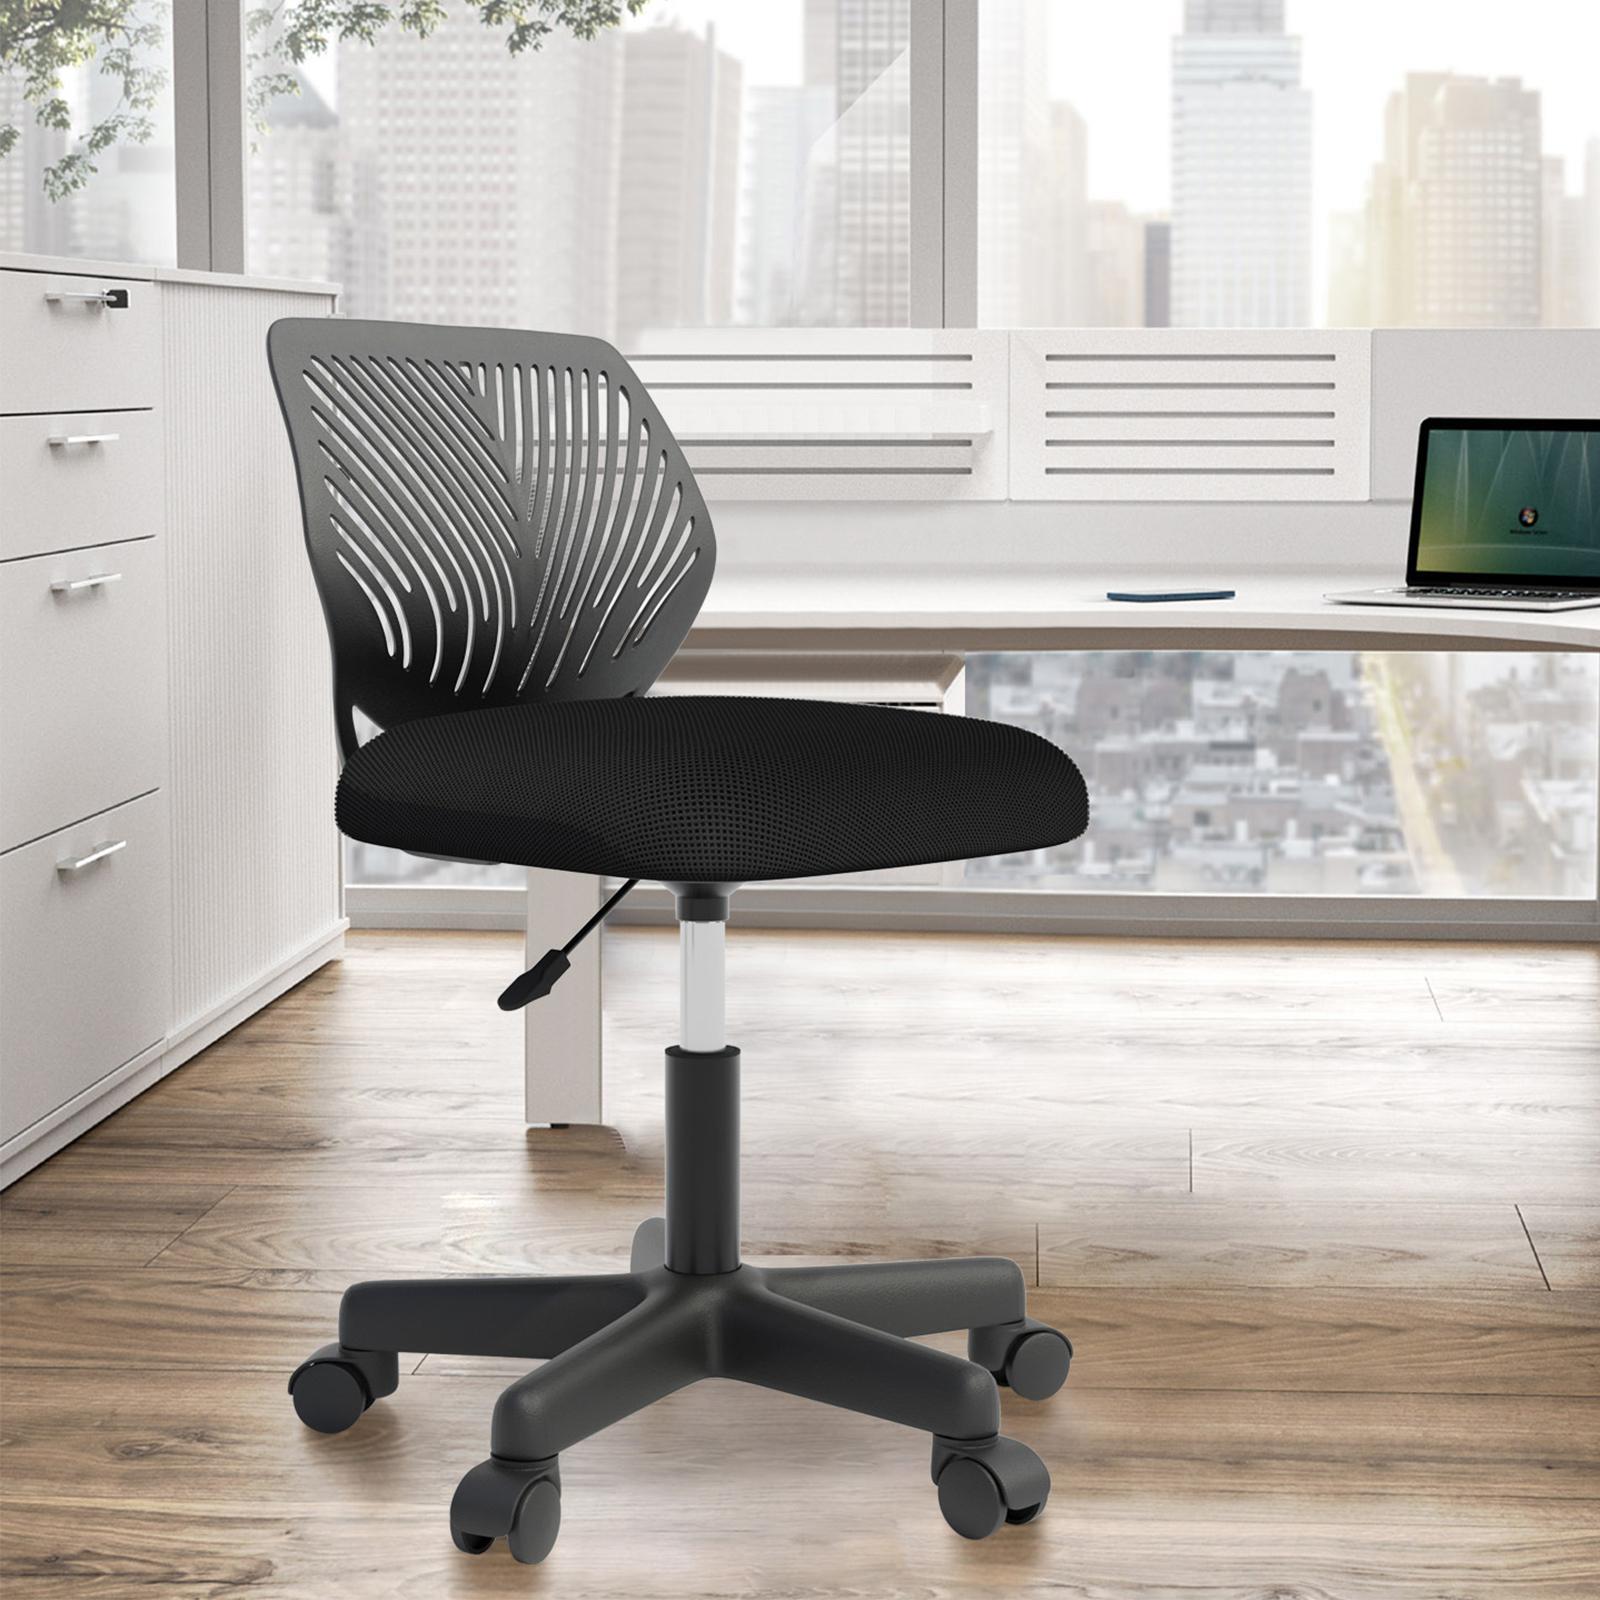 Advwin Ergonomic Office Chair Armless Mesh Office Chair Height Adjustable Desk Chair